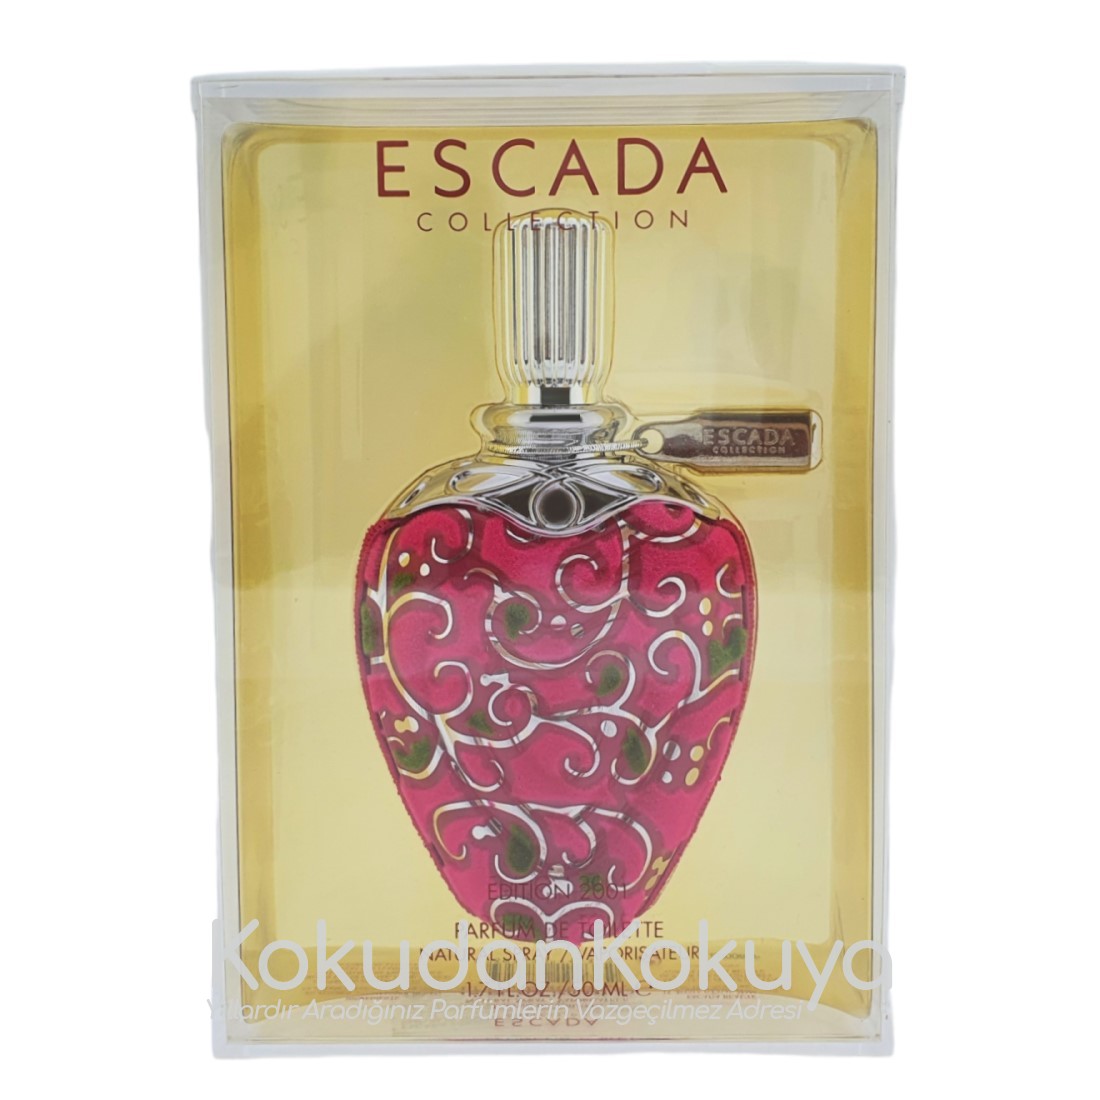 ESCADA Escada Collection (Vintage) Parfüm Kadın 50ml Parfum de Toilette  Sprey 